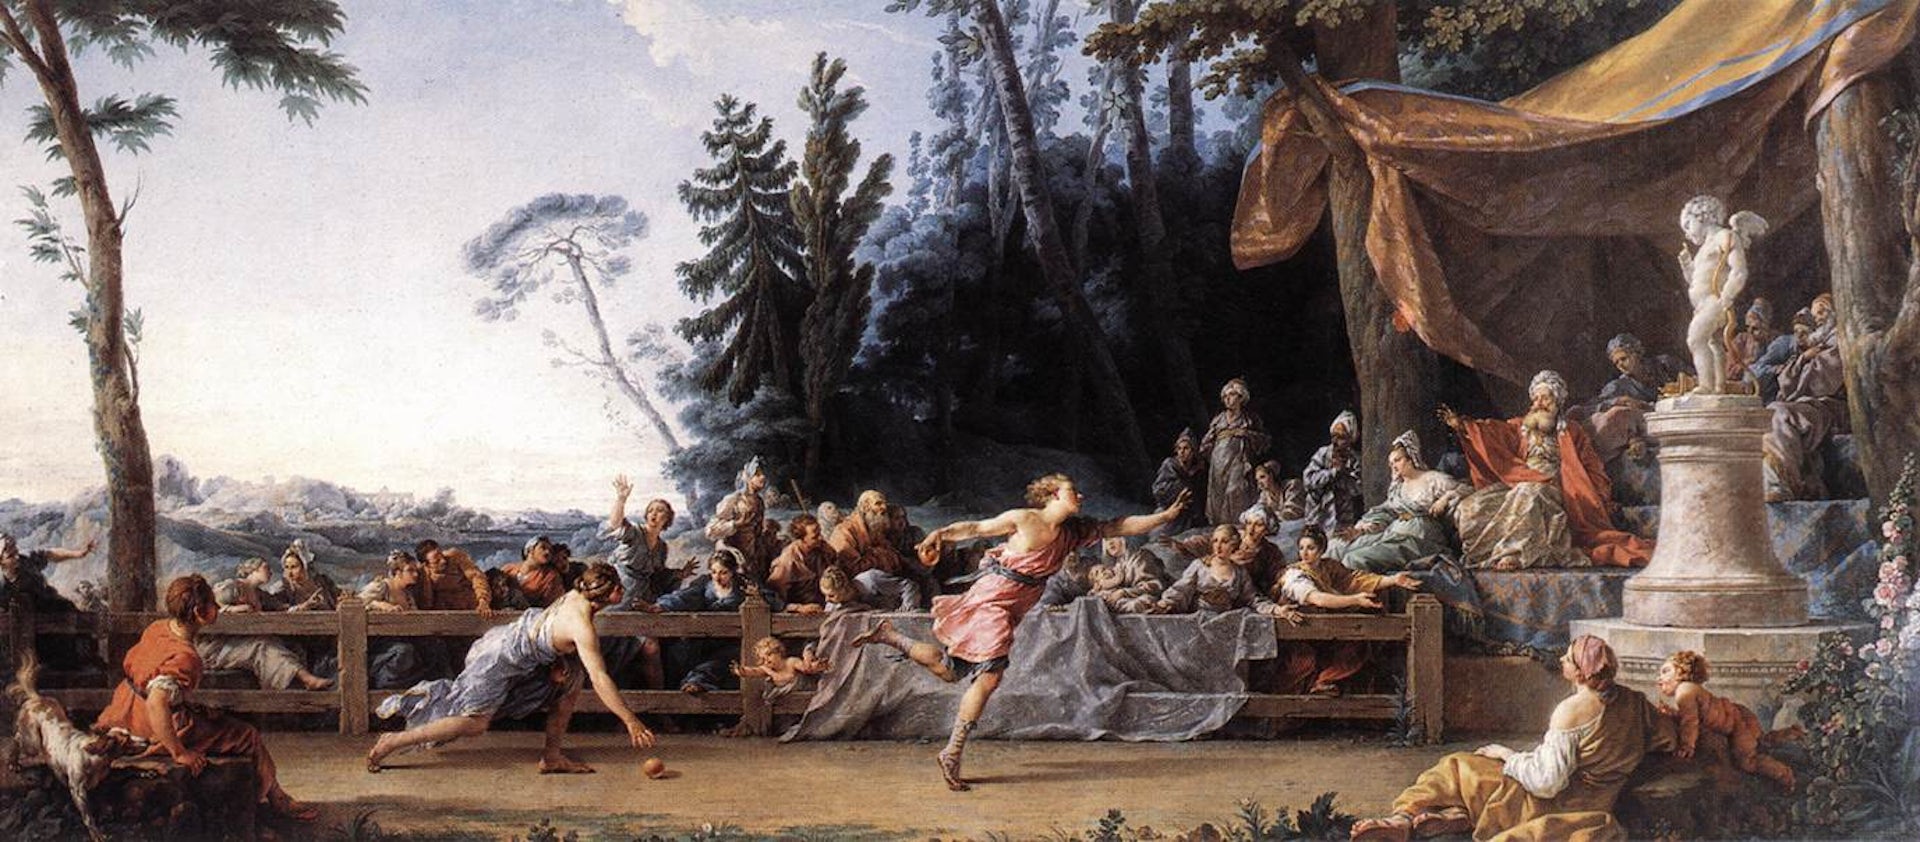 The Race between Hippomenes and Atalanta by Noël Hallé